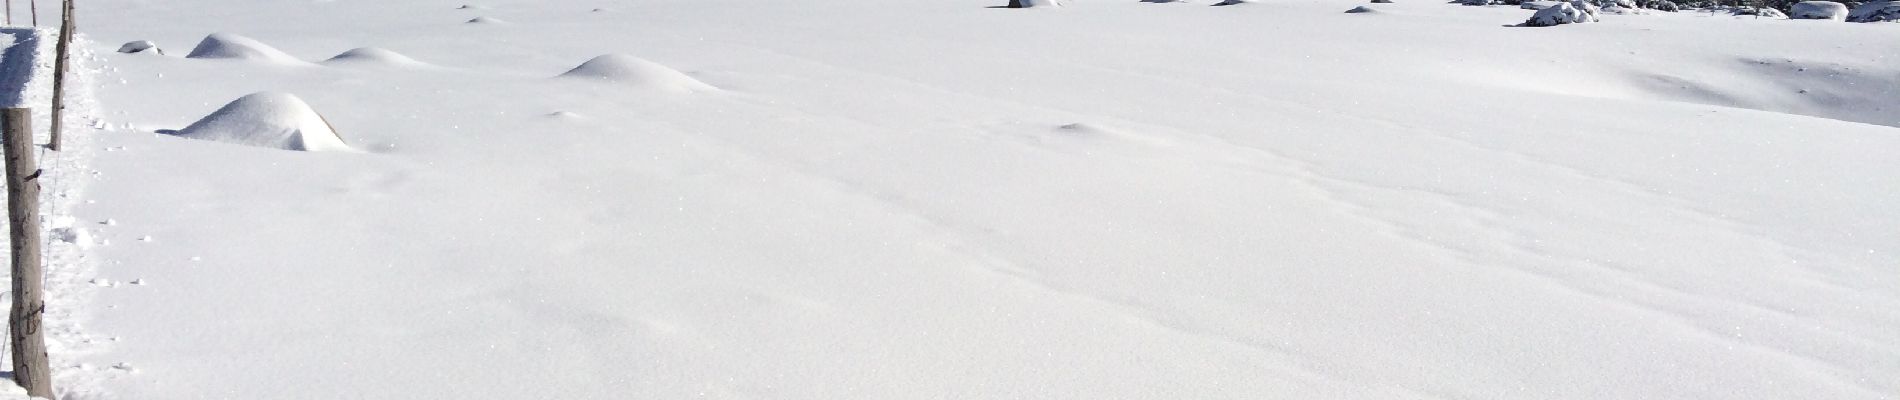 Percorso Racchette da neve Les Angles - Pla del mir lac d’aude bis  - Photo